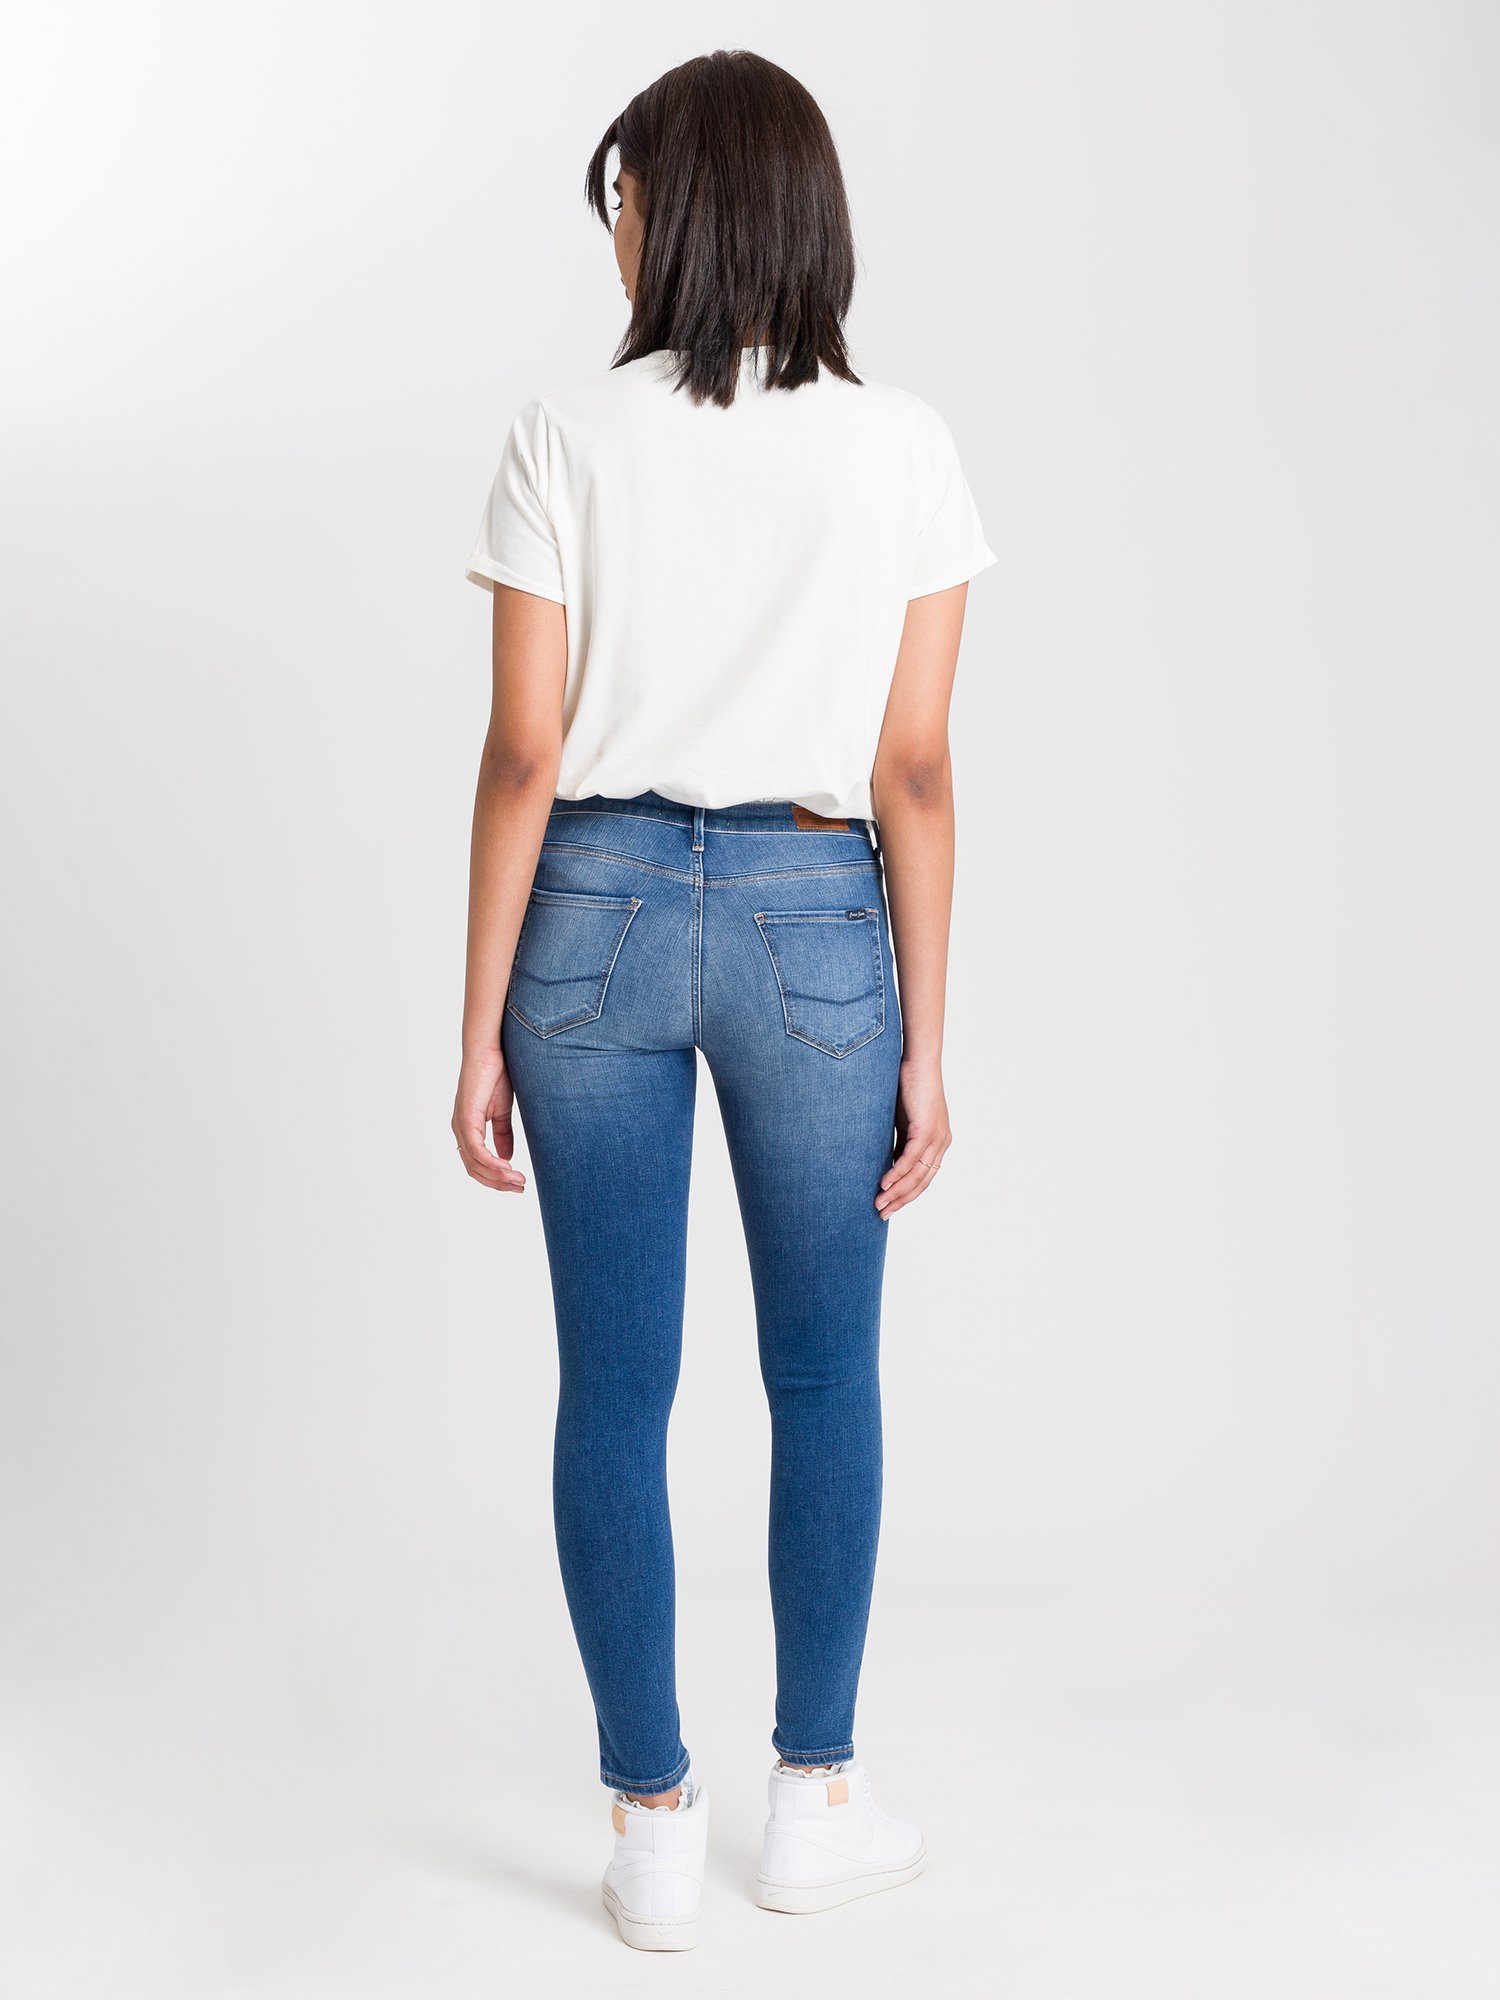 Giselle CROSS JEANS® Skinny-fit-Jeans